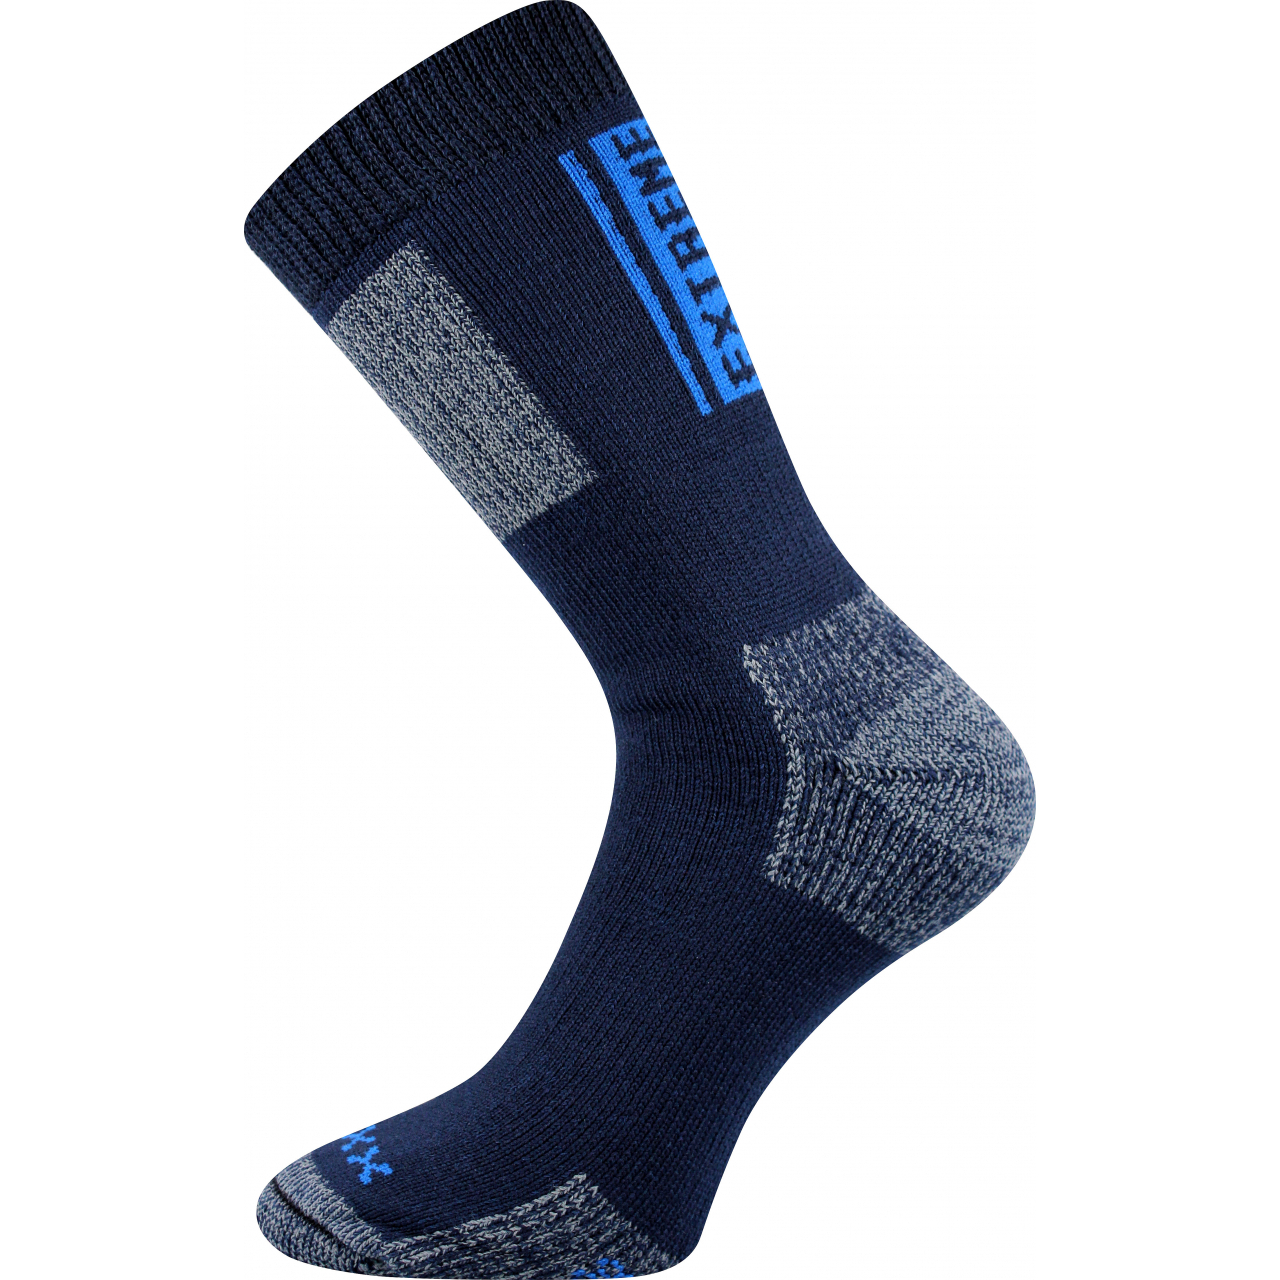 Ponožky unisex termo Voxx Extrém - tmavě modré, 43-46